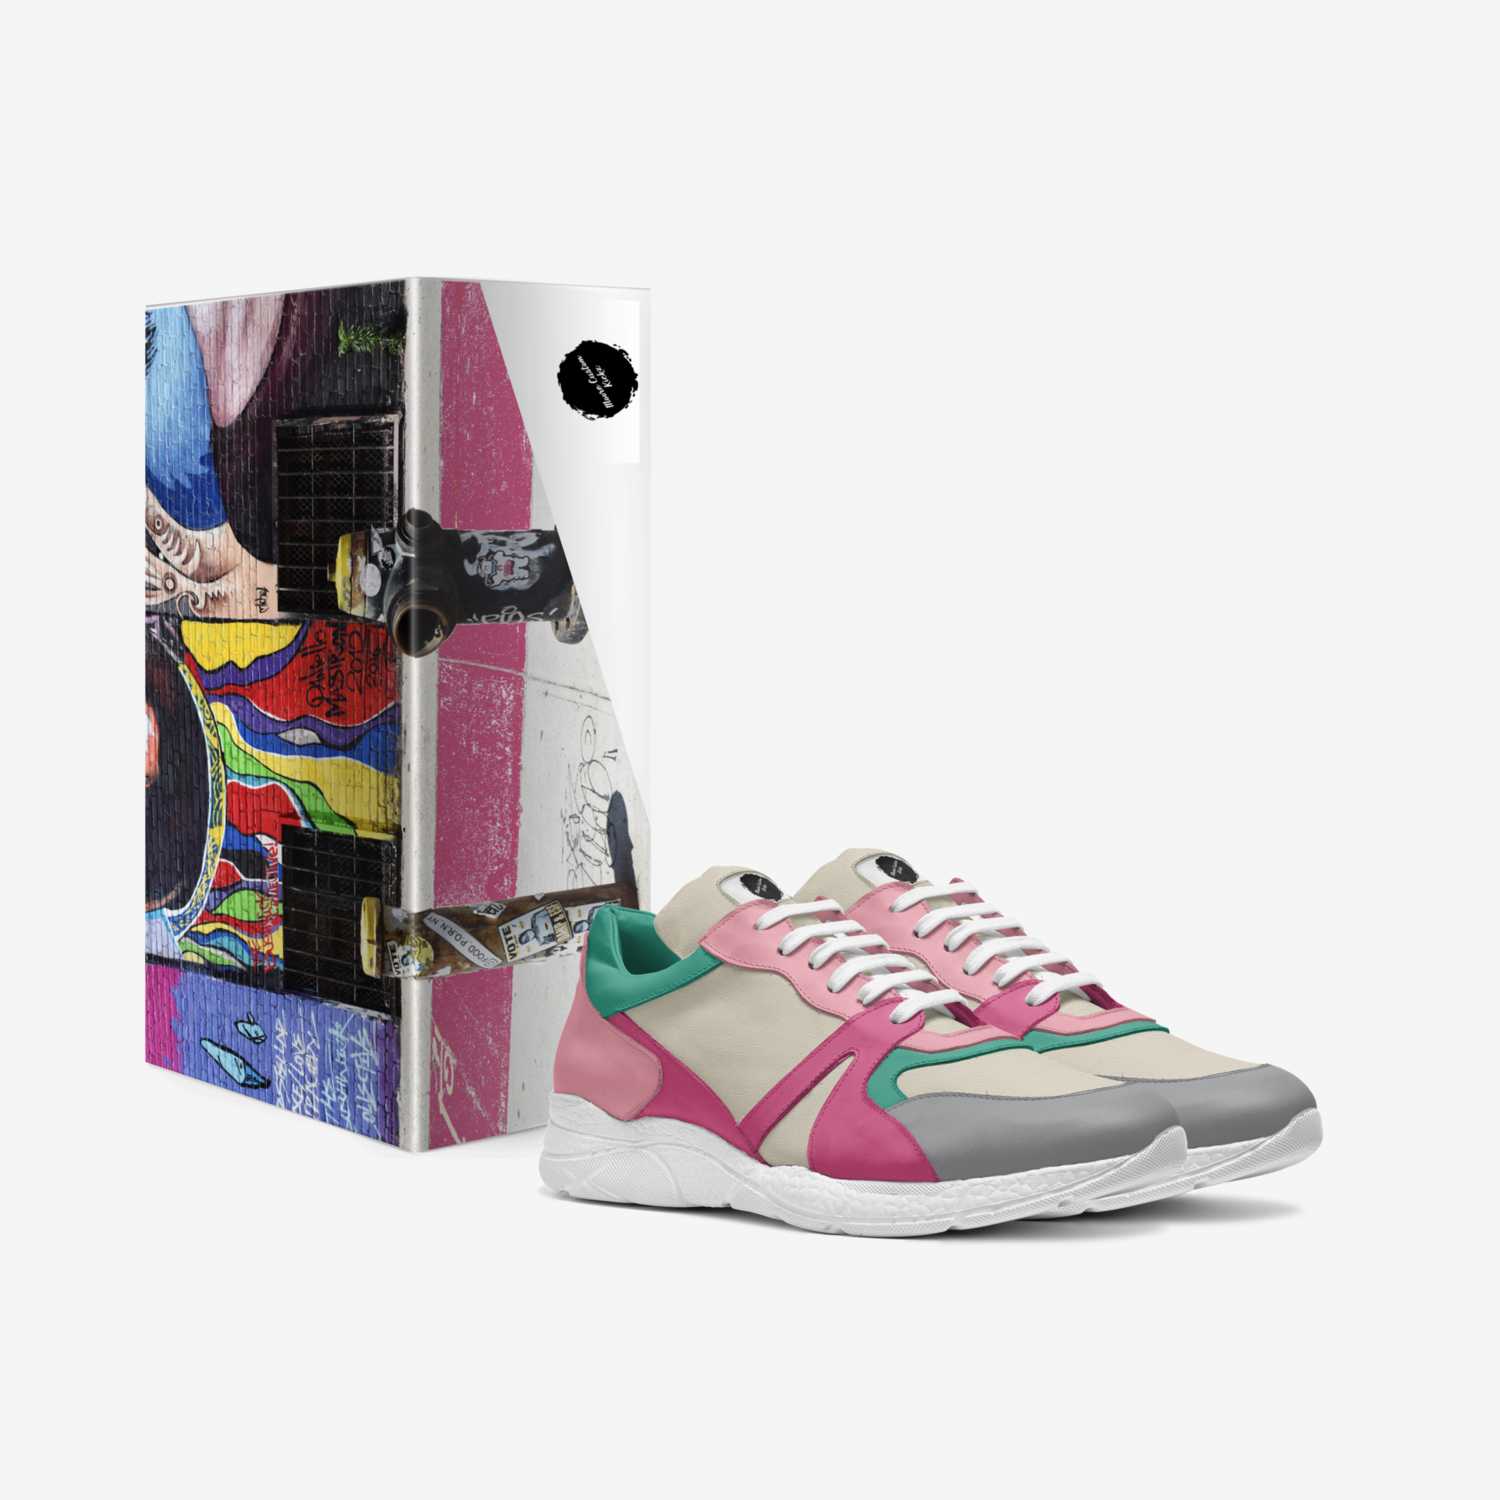 Moore Custom Kickz | A Custom Shoe concept by Moore Jr